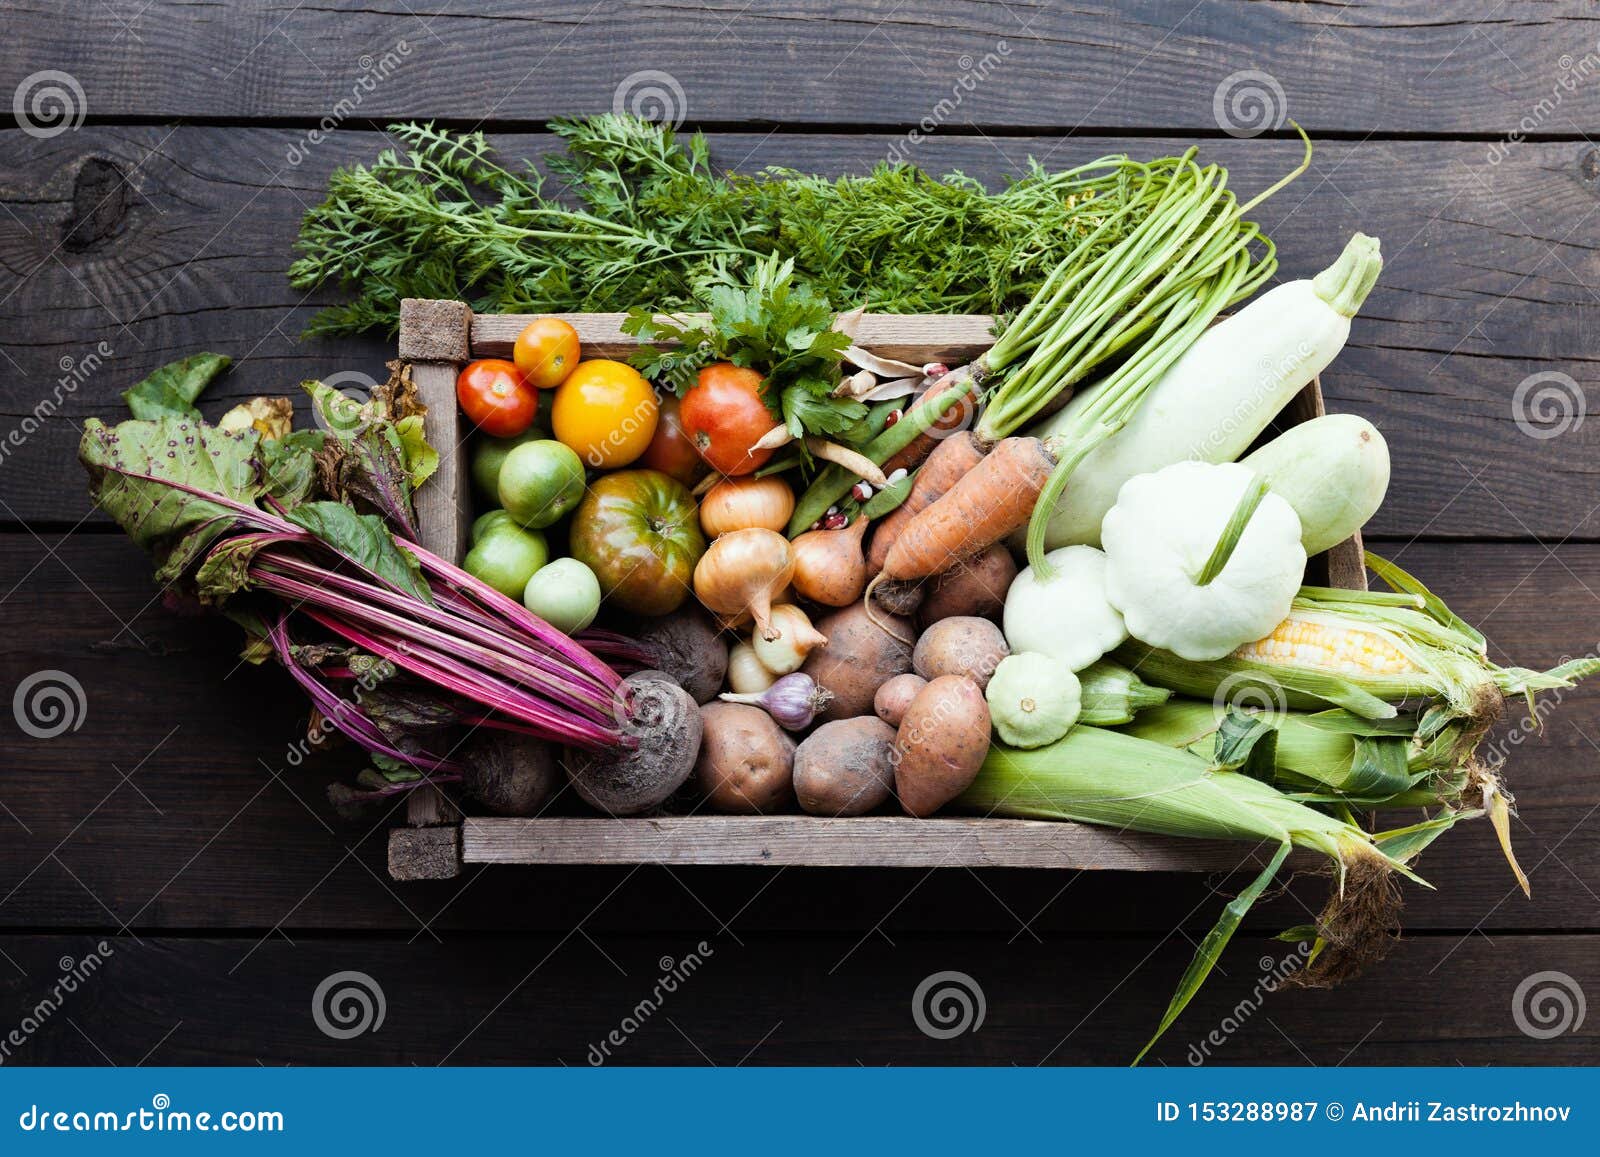 fresh detox vegetarian food, farm harvest